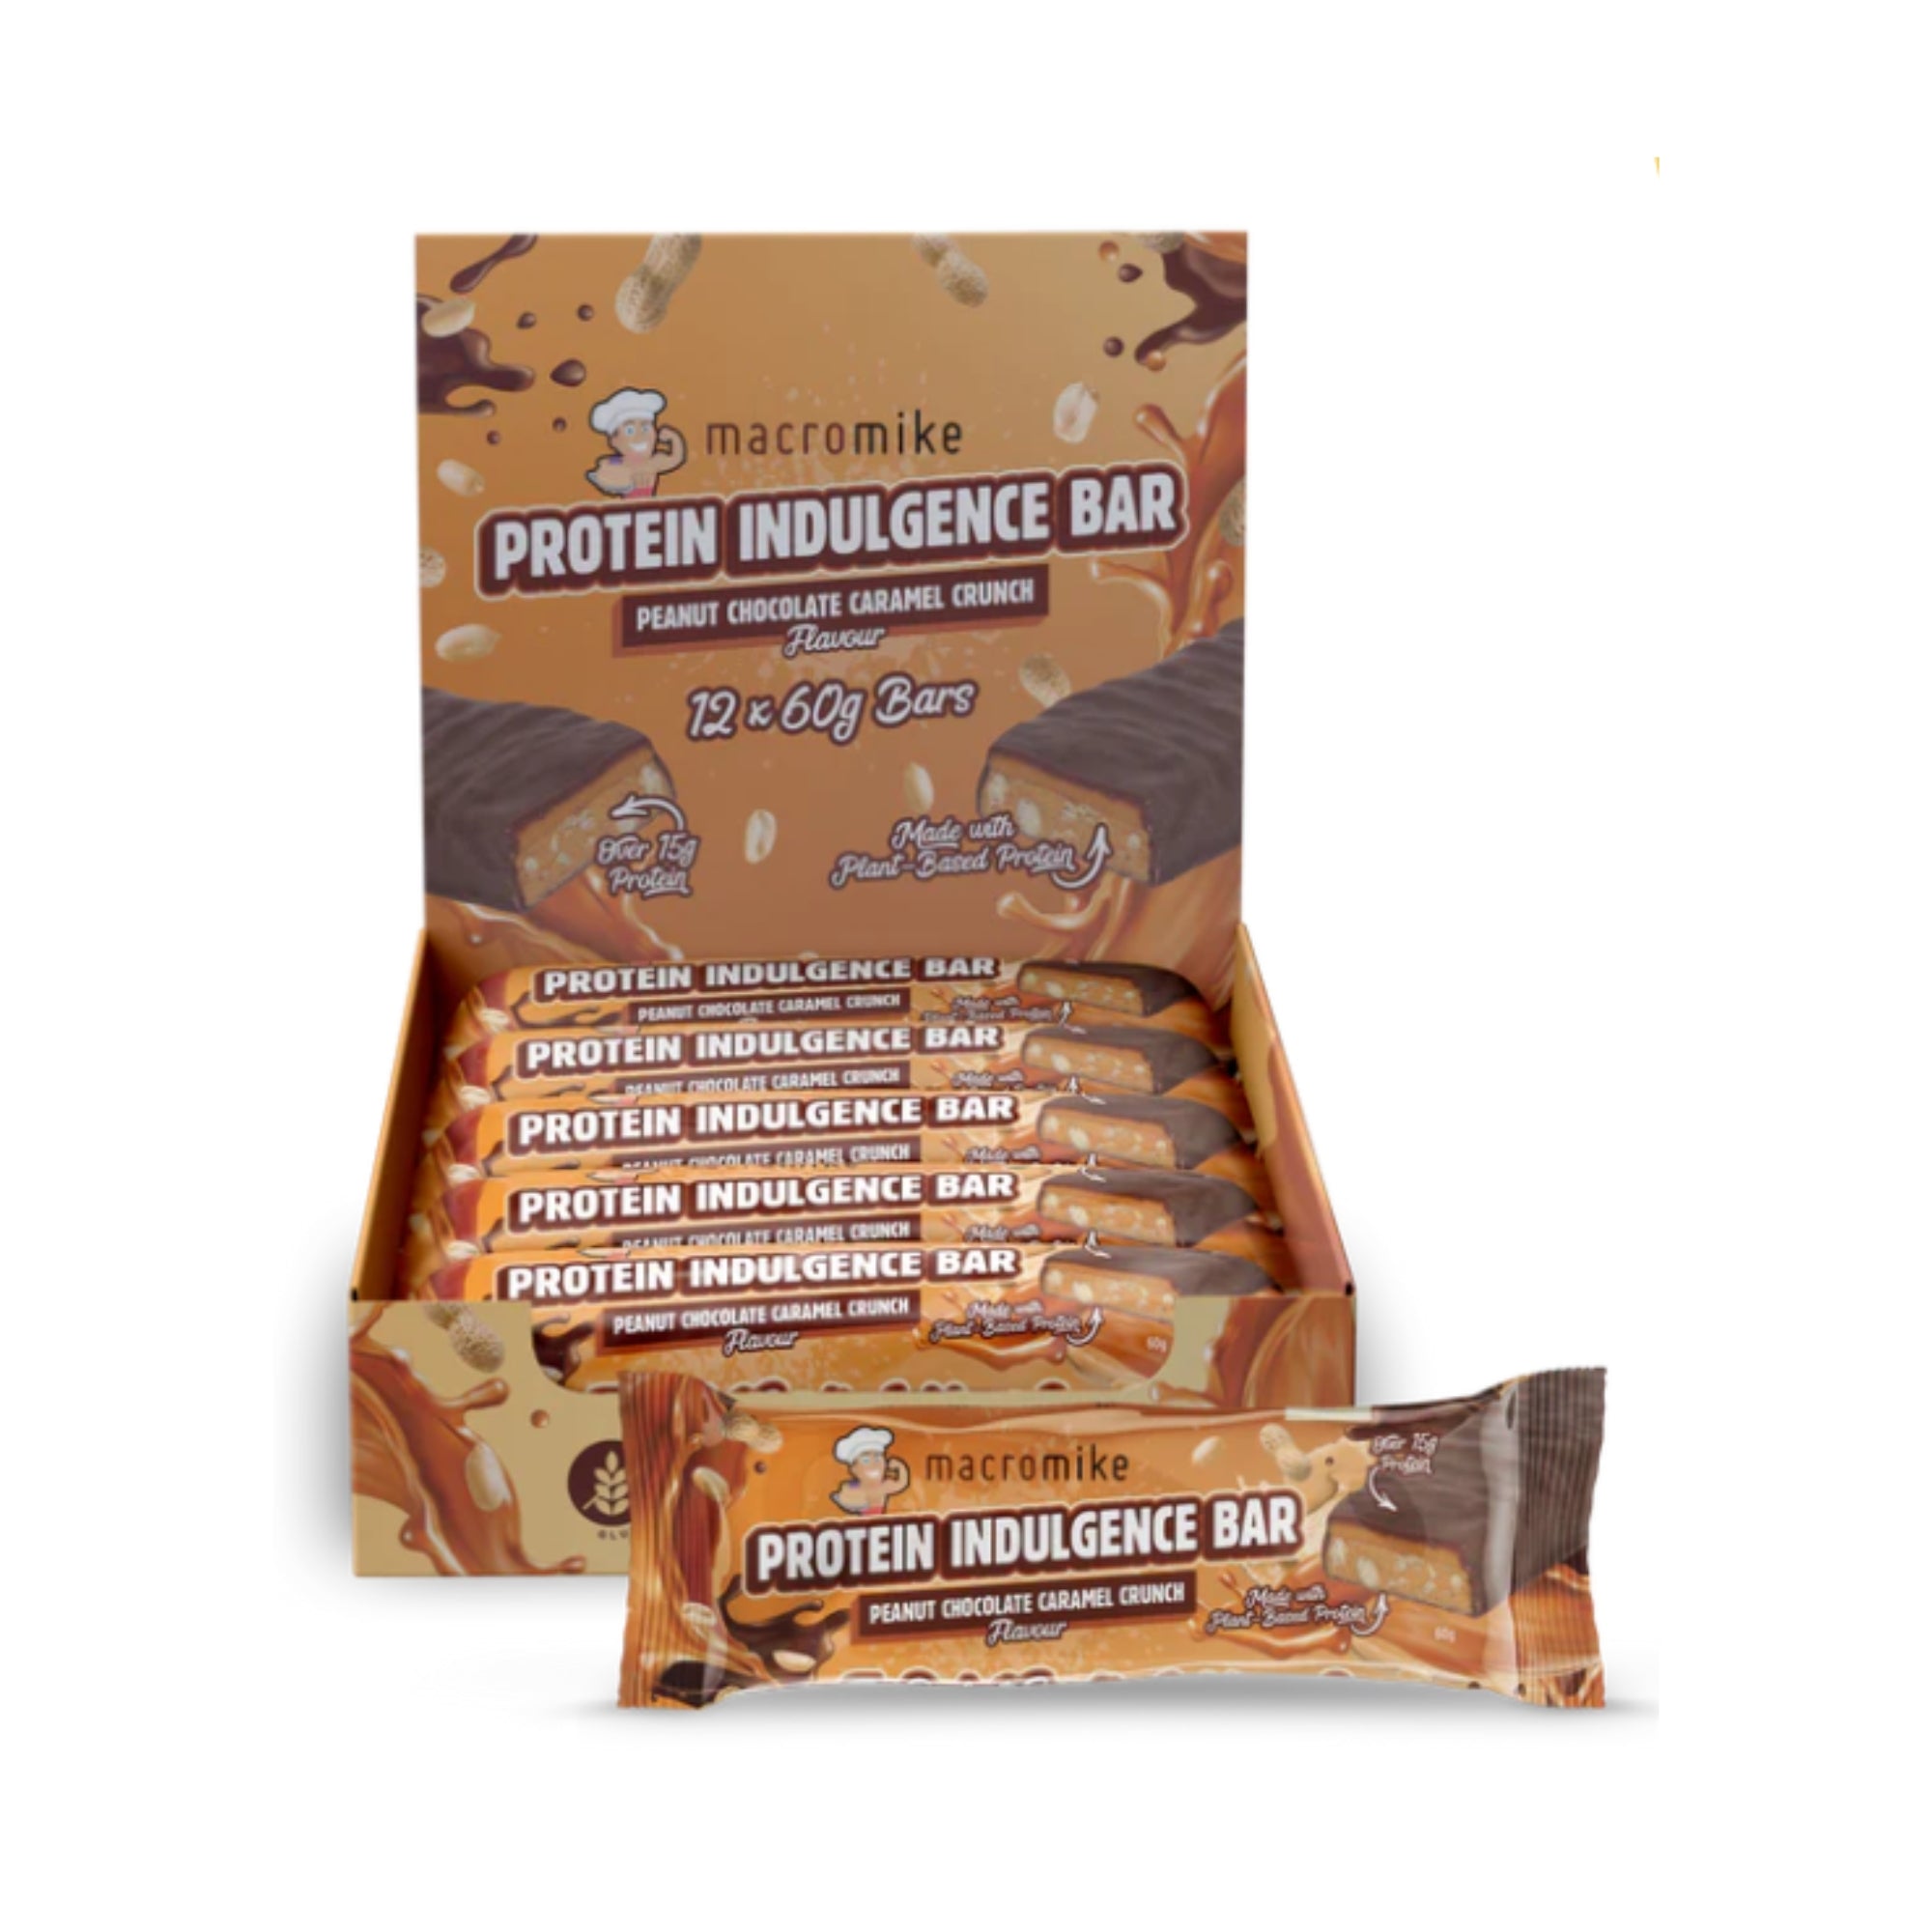 Macro Mike Protein Indulgence Bar - Box of 12 Peanut Choc Caramel Crunch